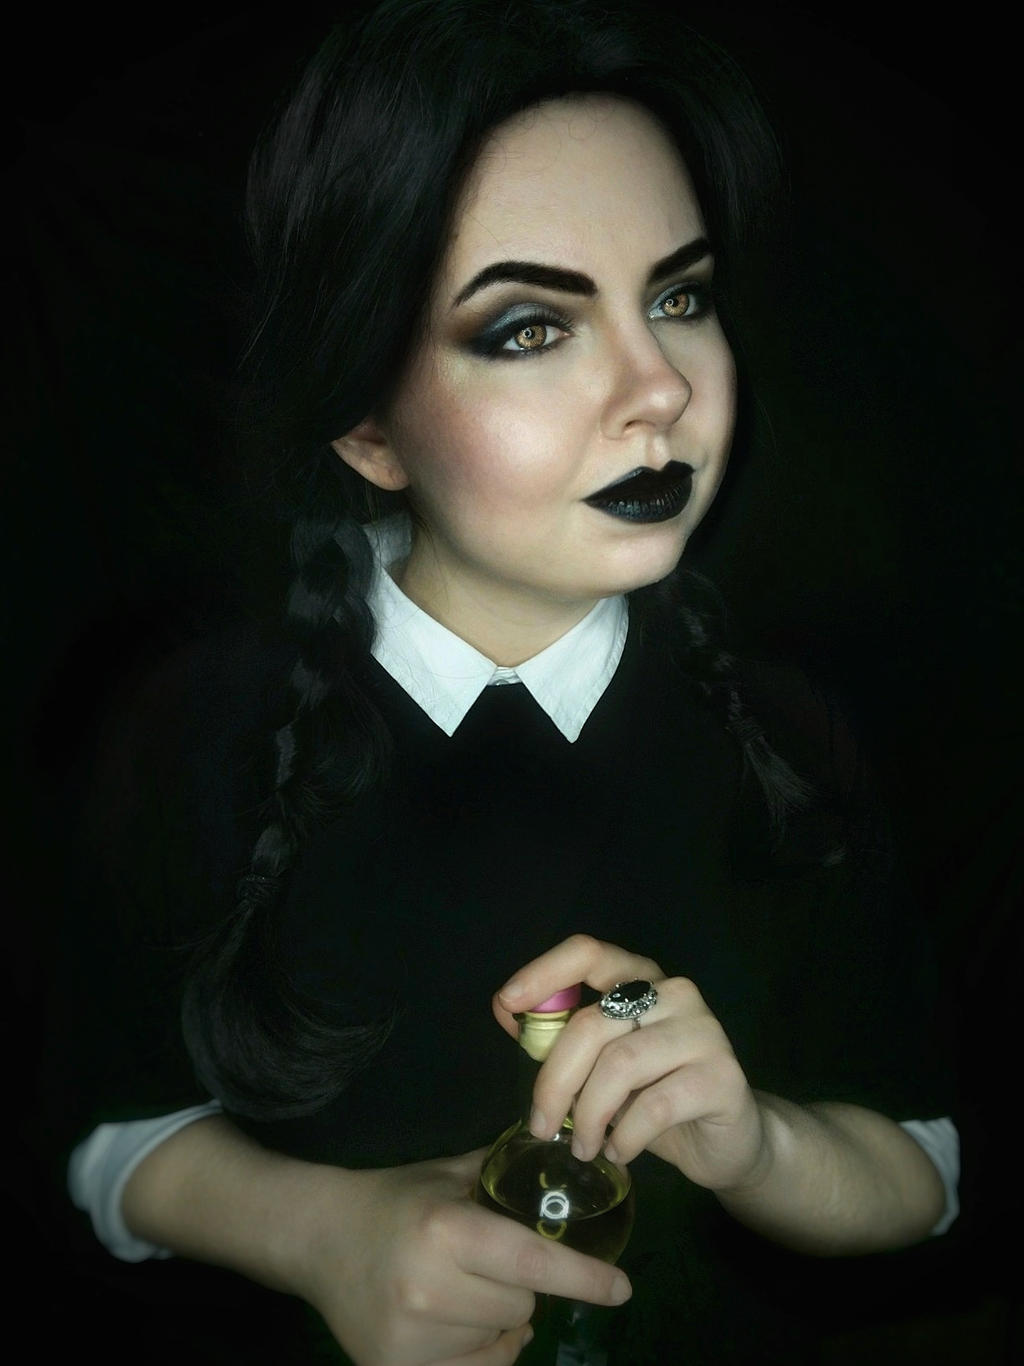 Wednesday Addams cosplay by JuliaHellbinder on DeviantArt